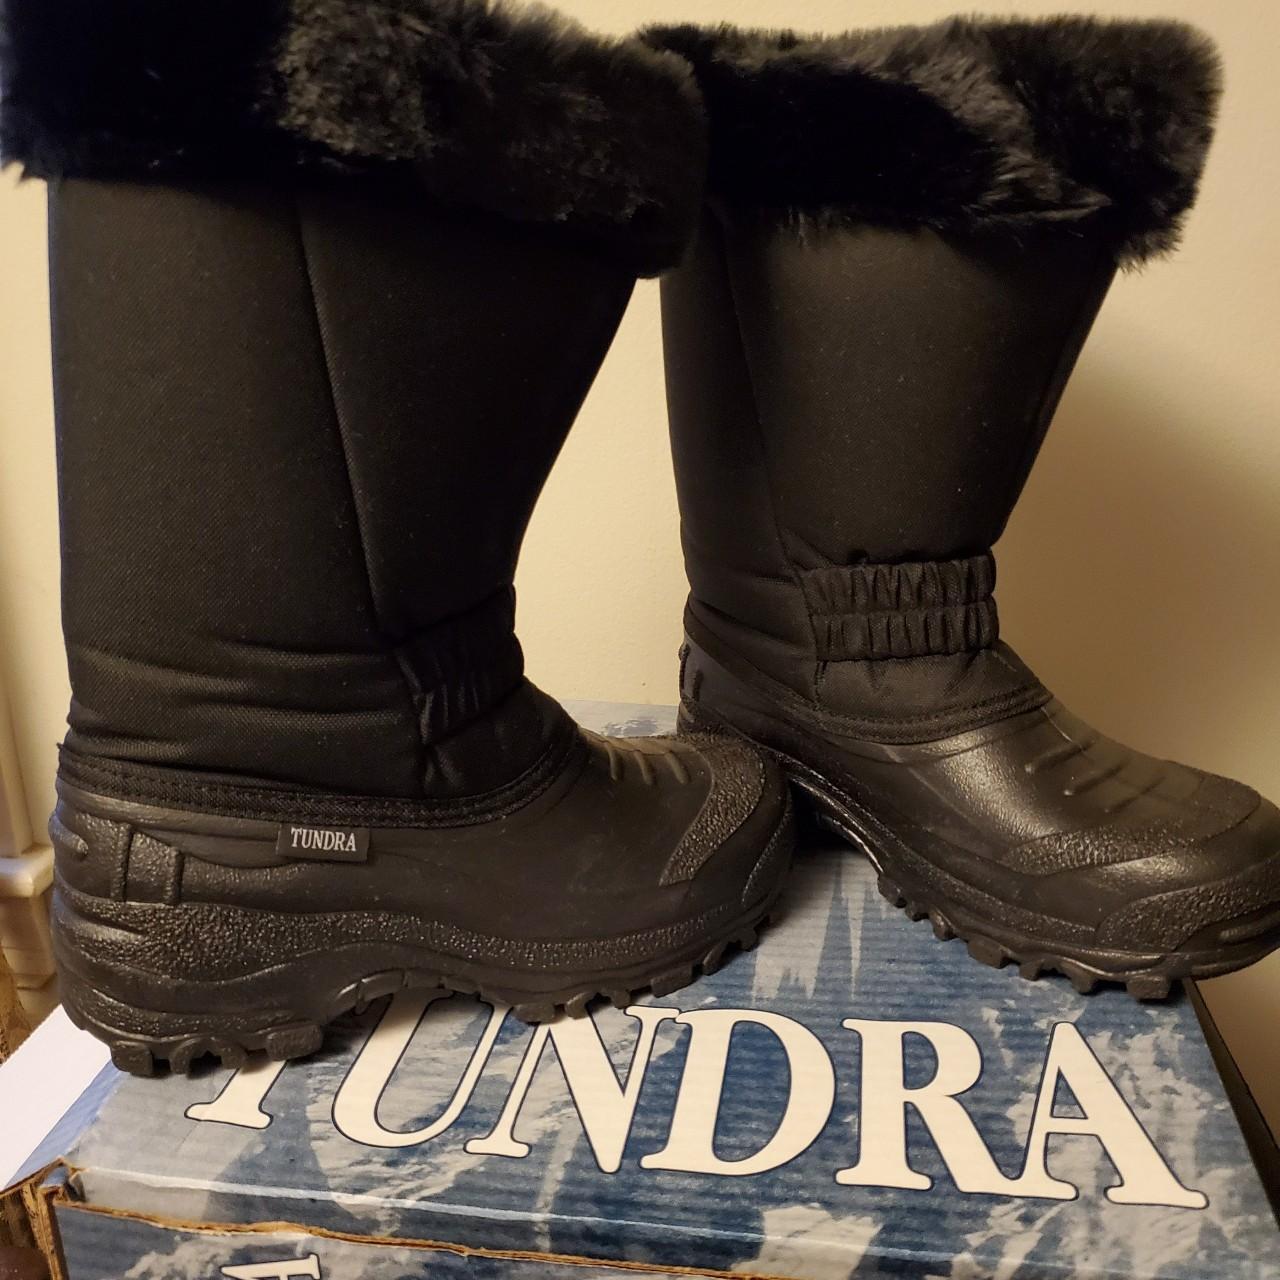 Product Image 1 - Tundra Glacier Snow boots. Fur